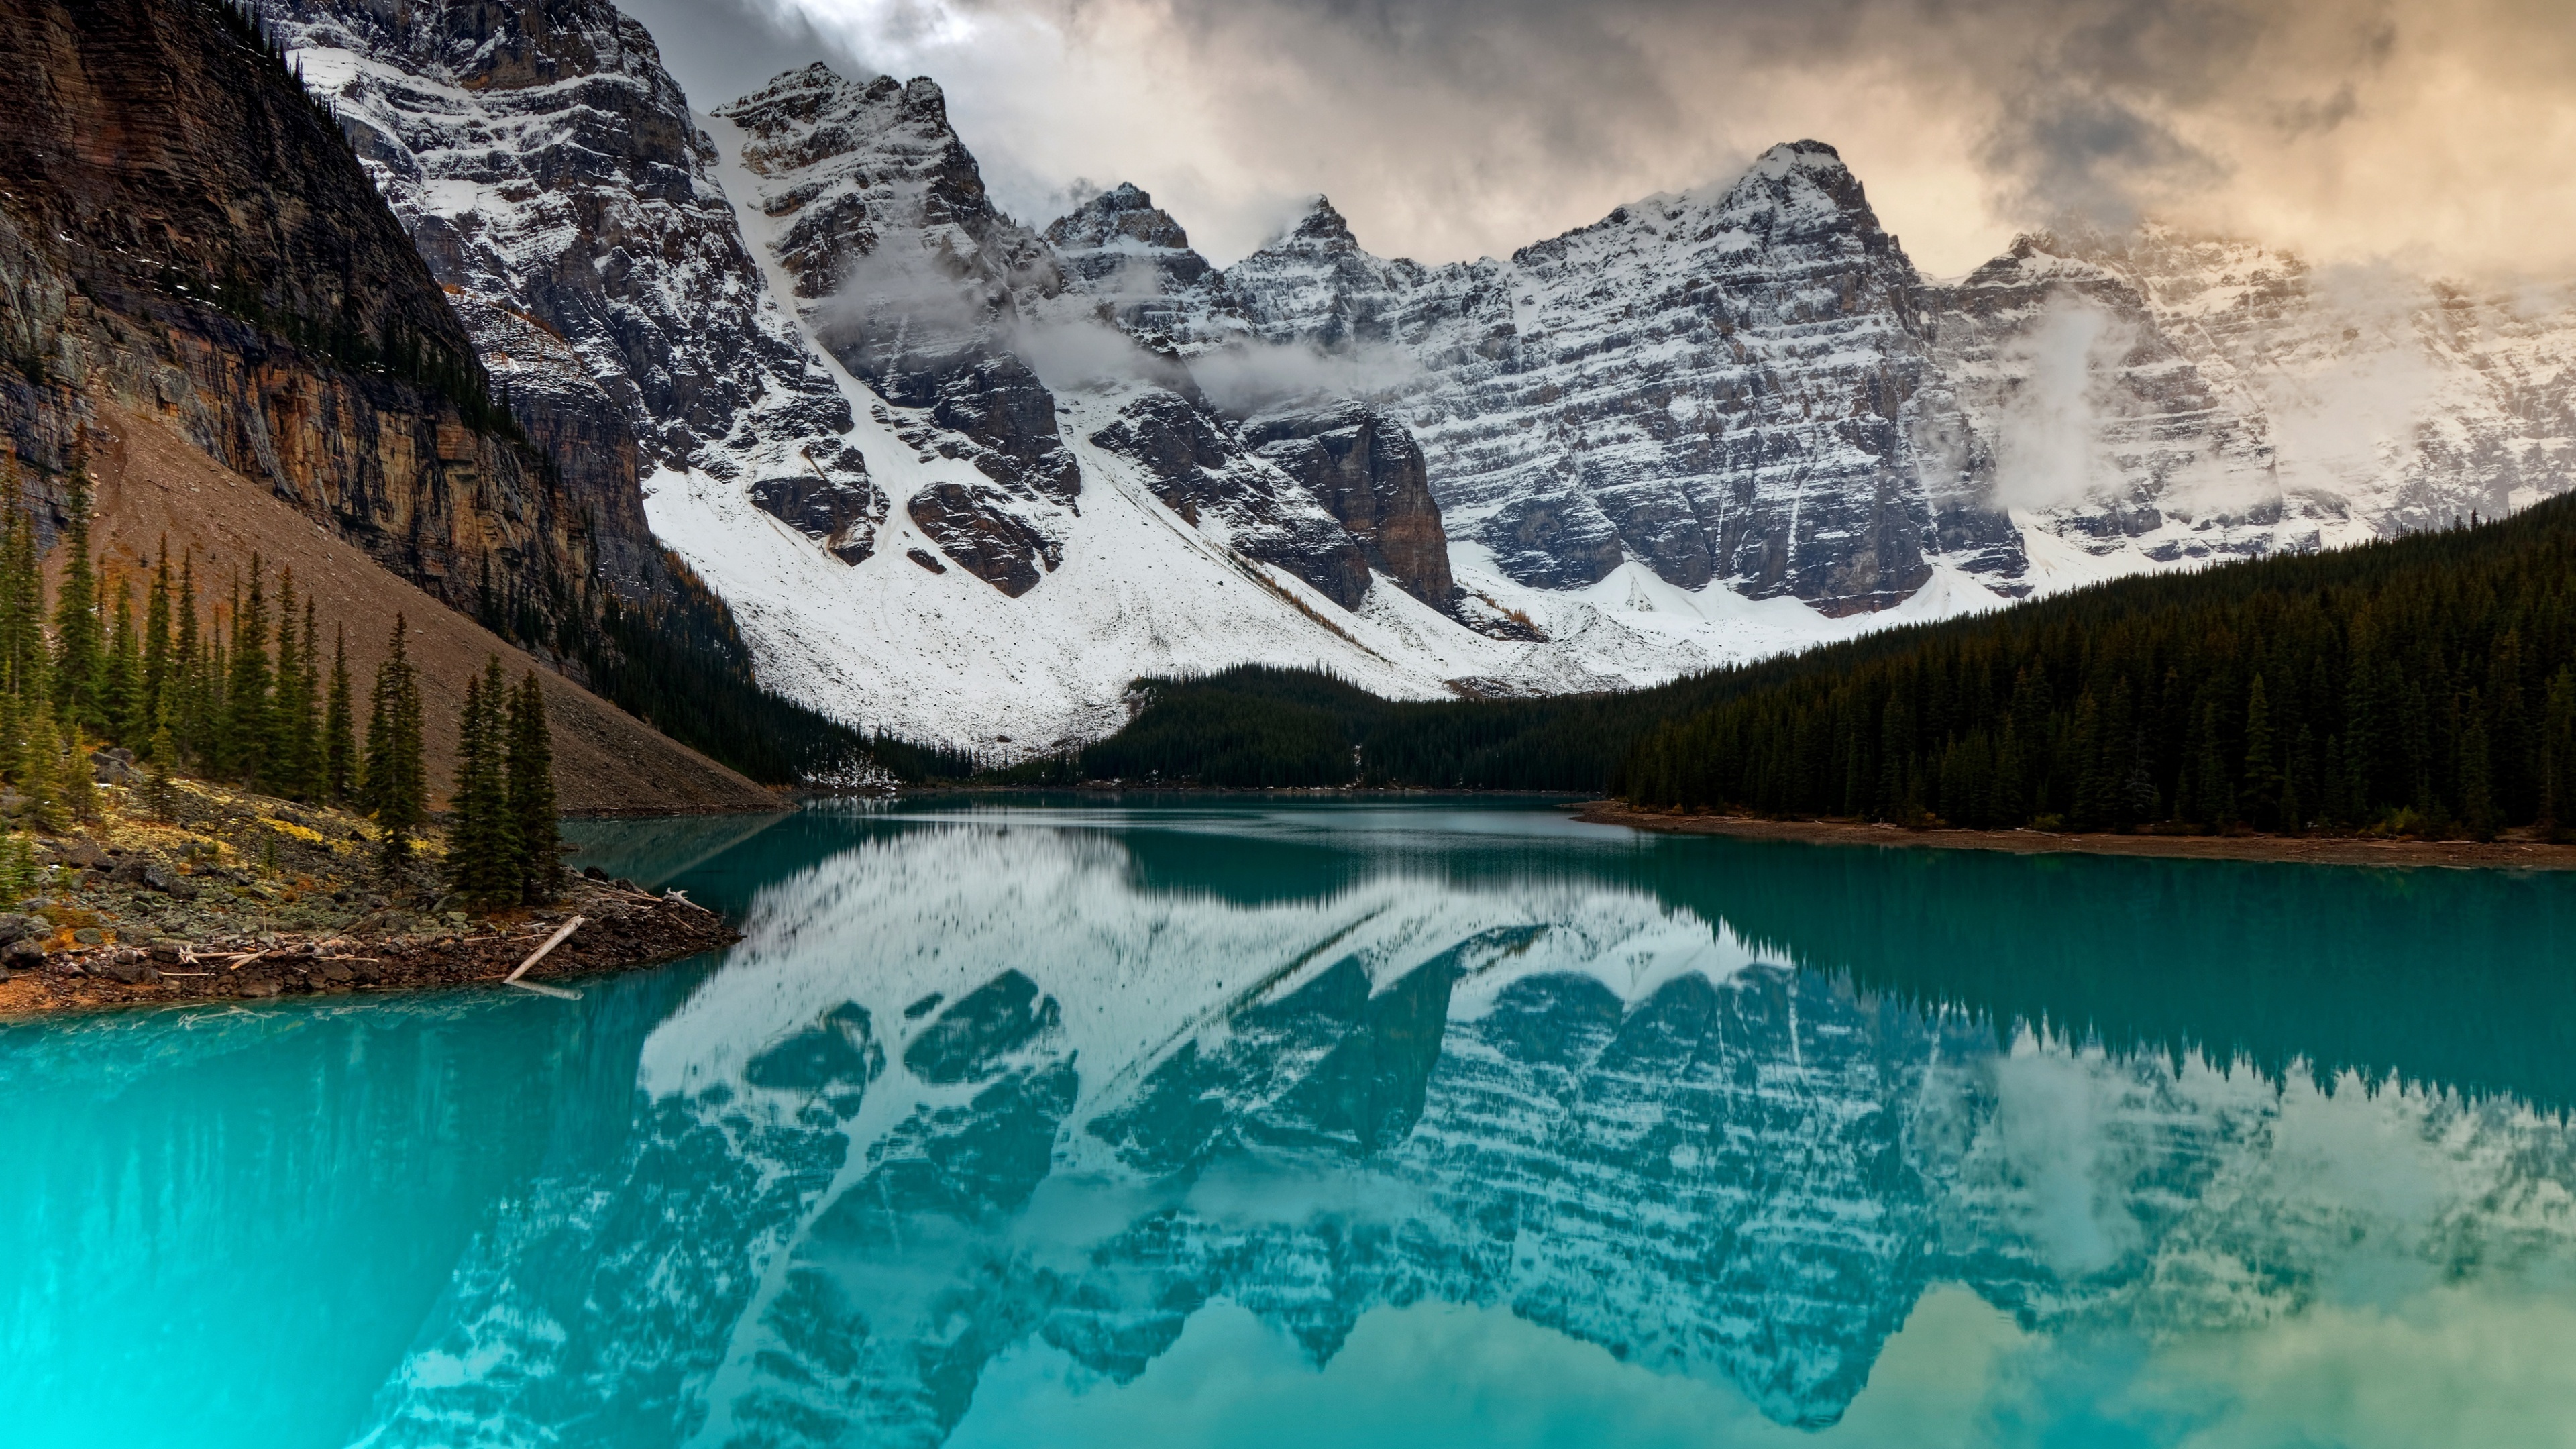 Moraine Lake, Scenic mountains, Reflection nature, Banff National Park, 3840x2160 4K Desktop